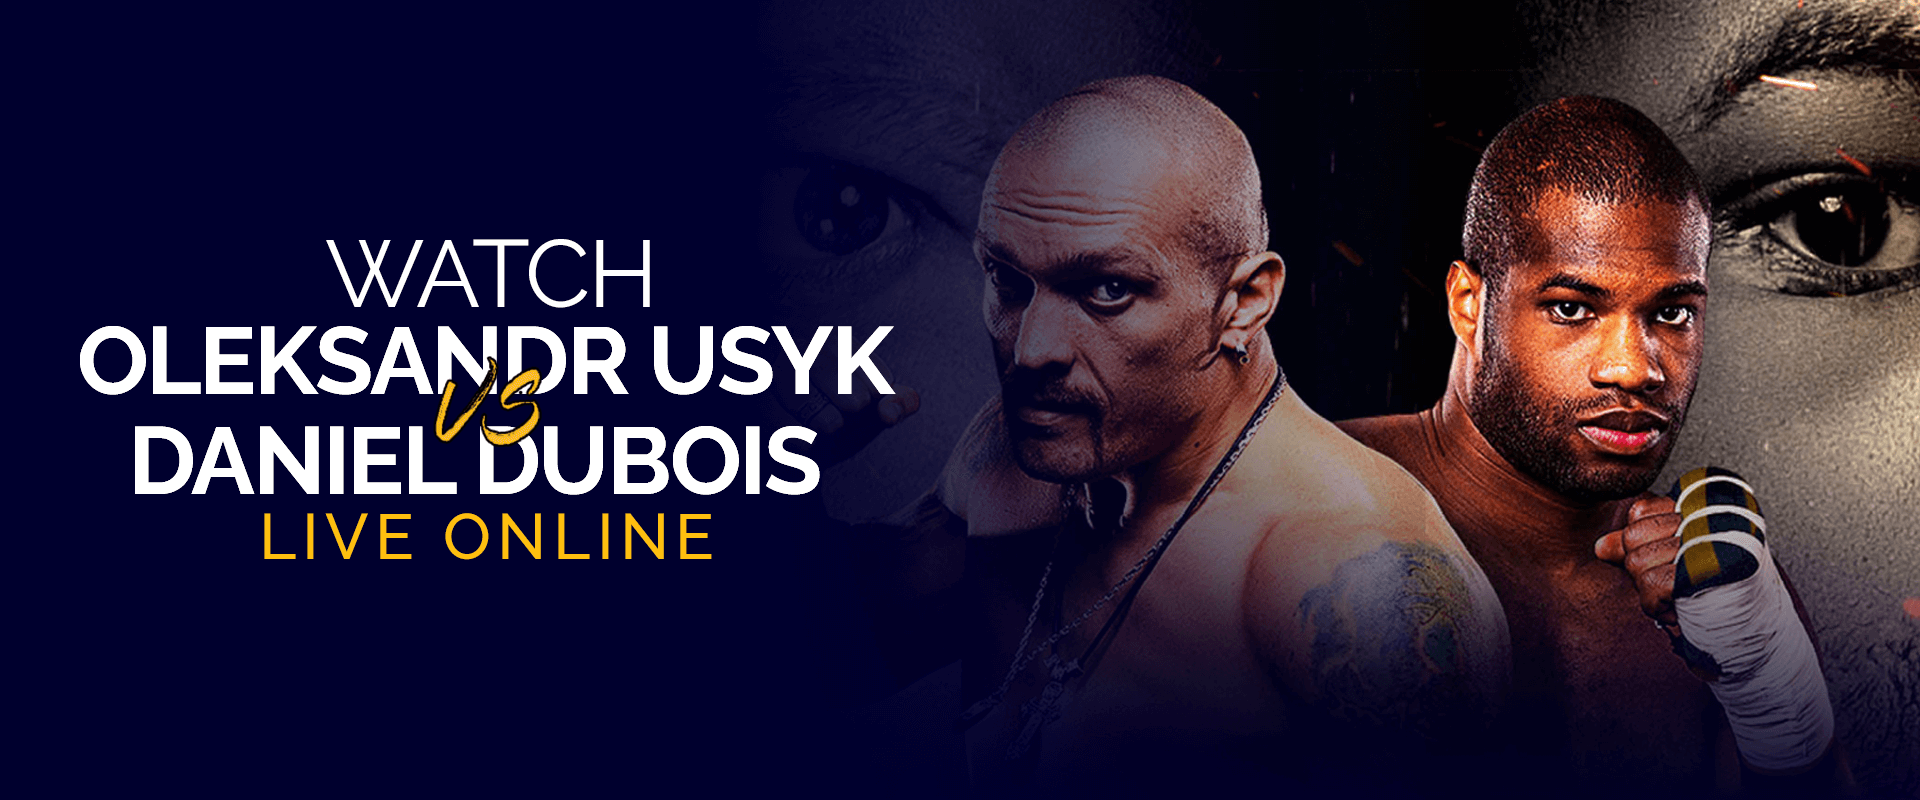 Regardez Oleksandr Usyk contre Daniel Dubois en direct en ligne